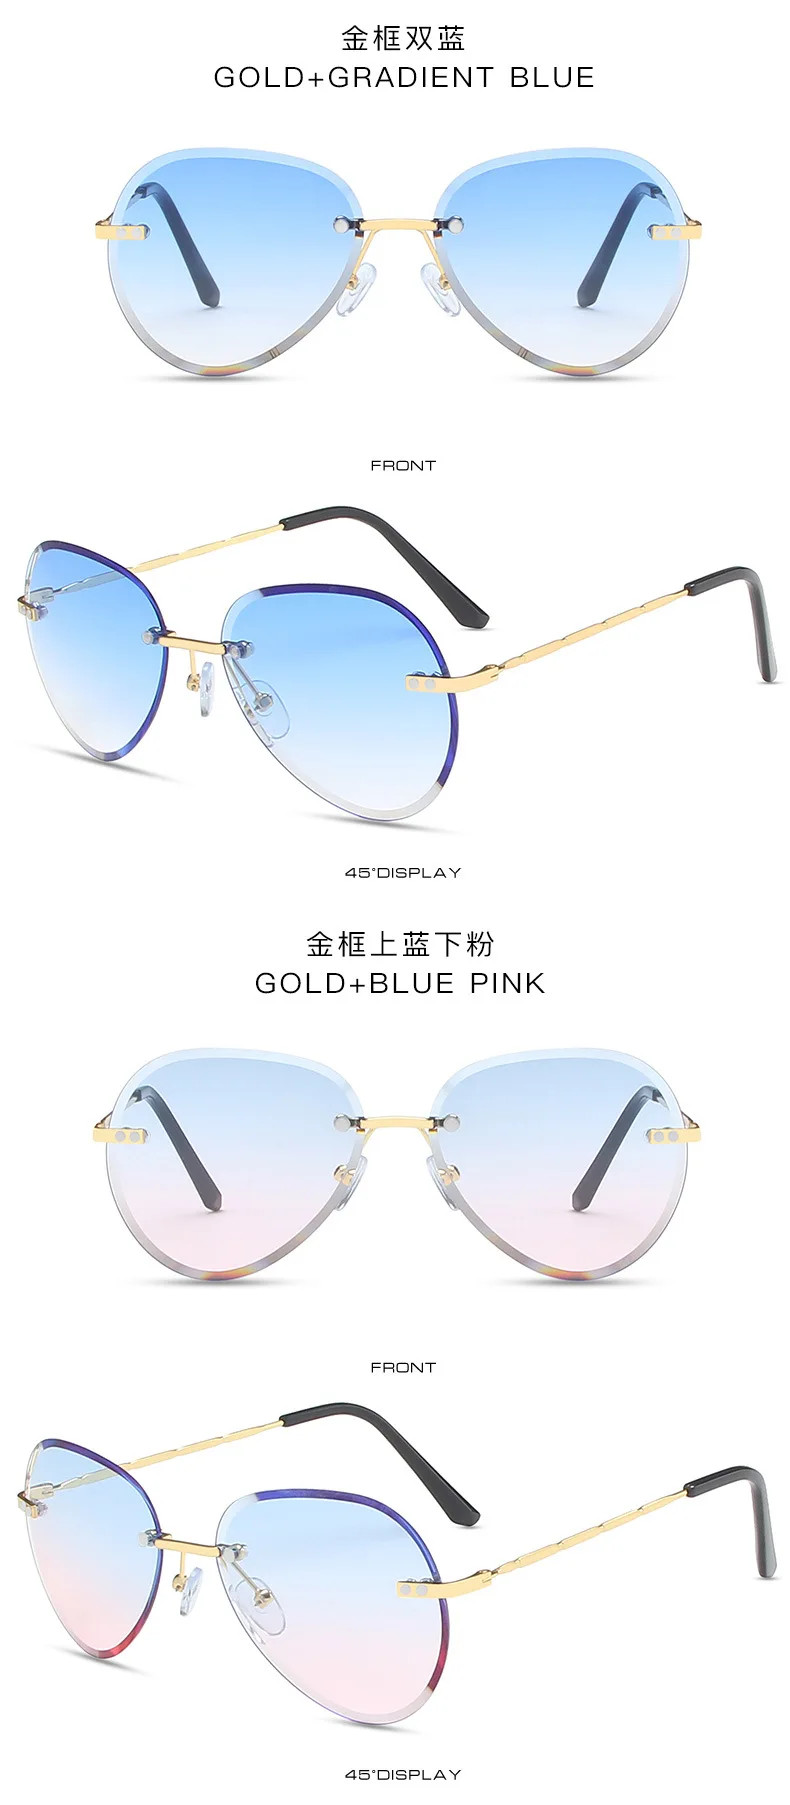 Wiley X Slay Gloss Black Frame with Polarized Grey Lenses | Sunglasses,  Grey sunglasses, Best shooting glasses